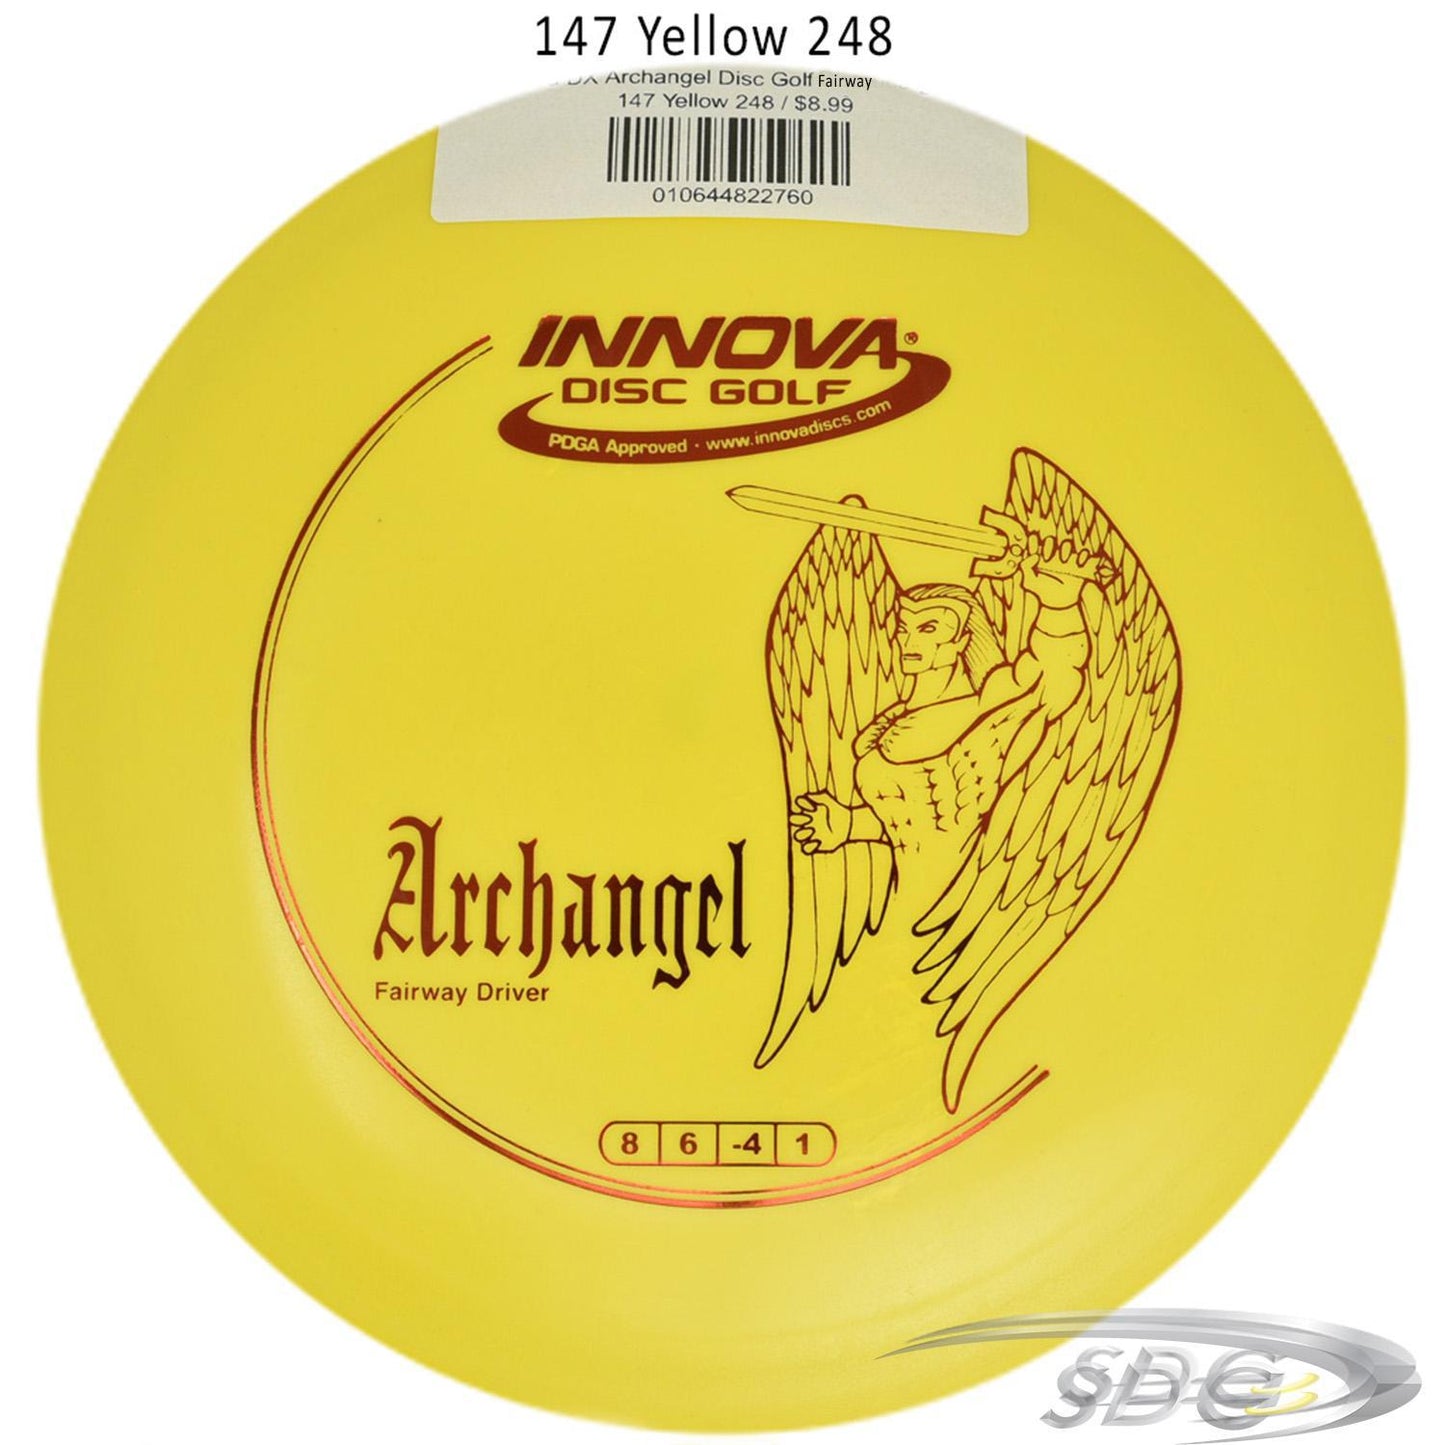 innova-dx-archangel-disc-golf-fairway-driver 147 Yellow 248 